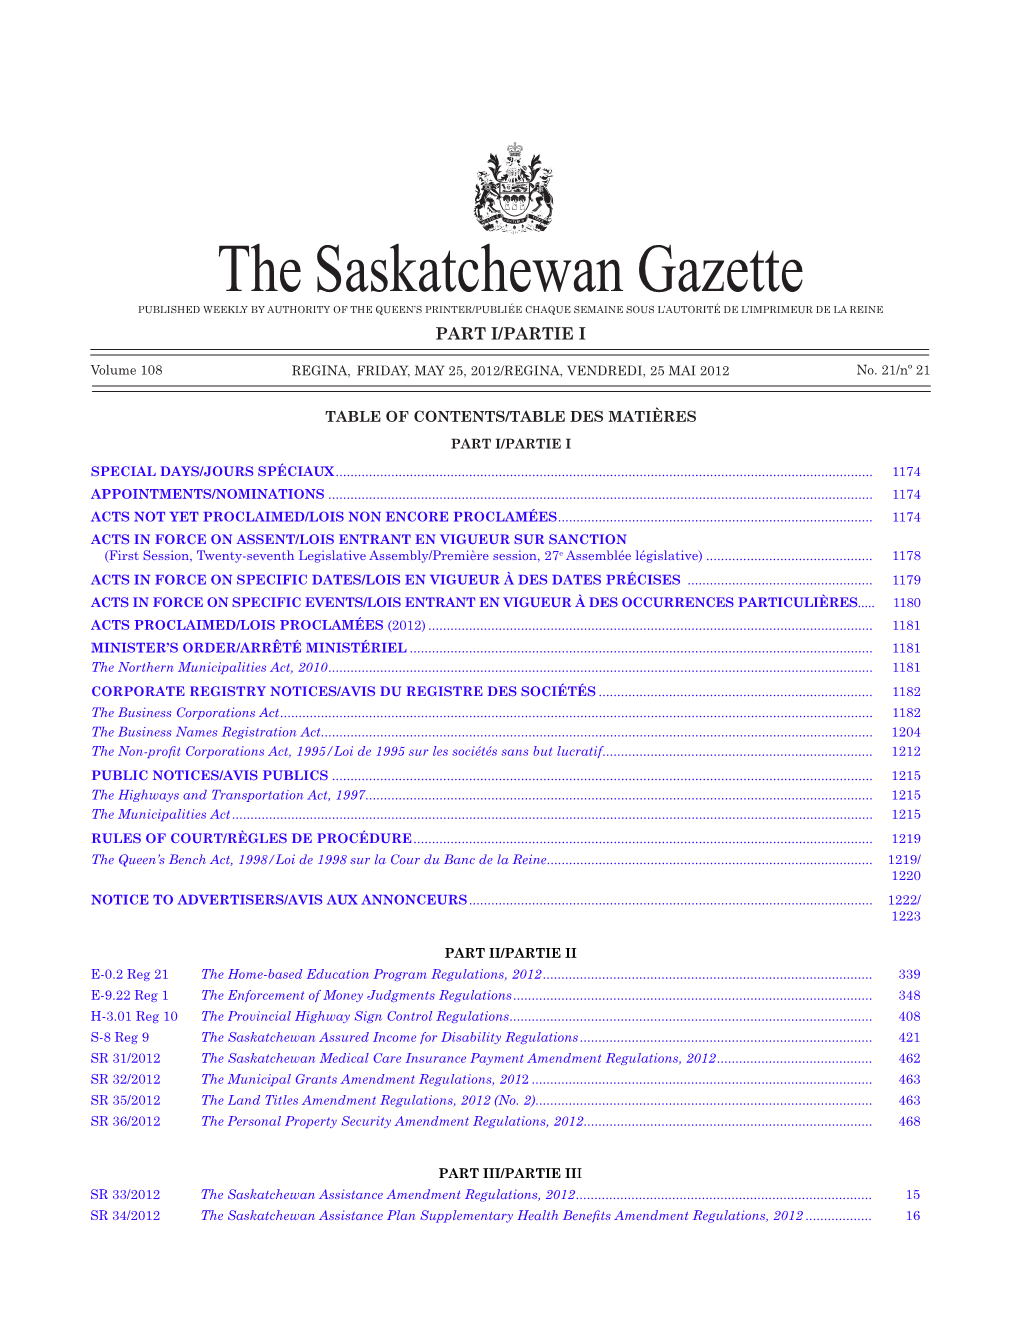 THE SASKATCHEWAN GAZETTE, May 25, 2012 1173